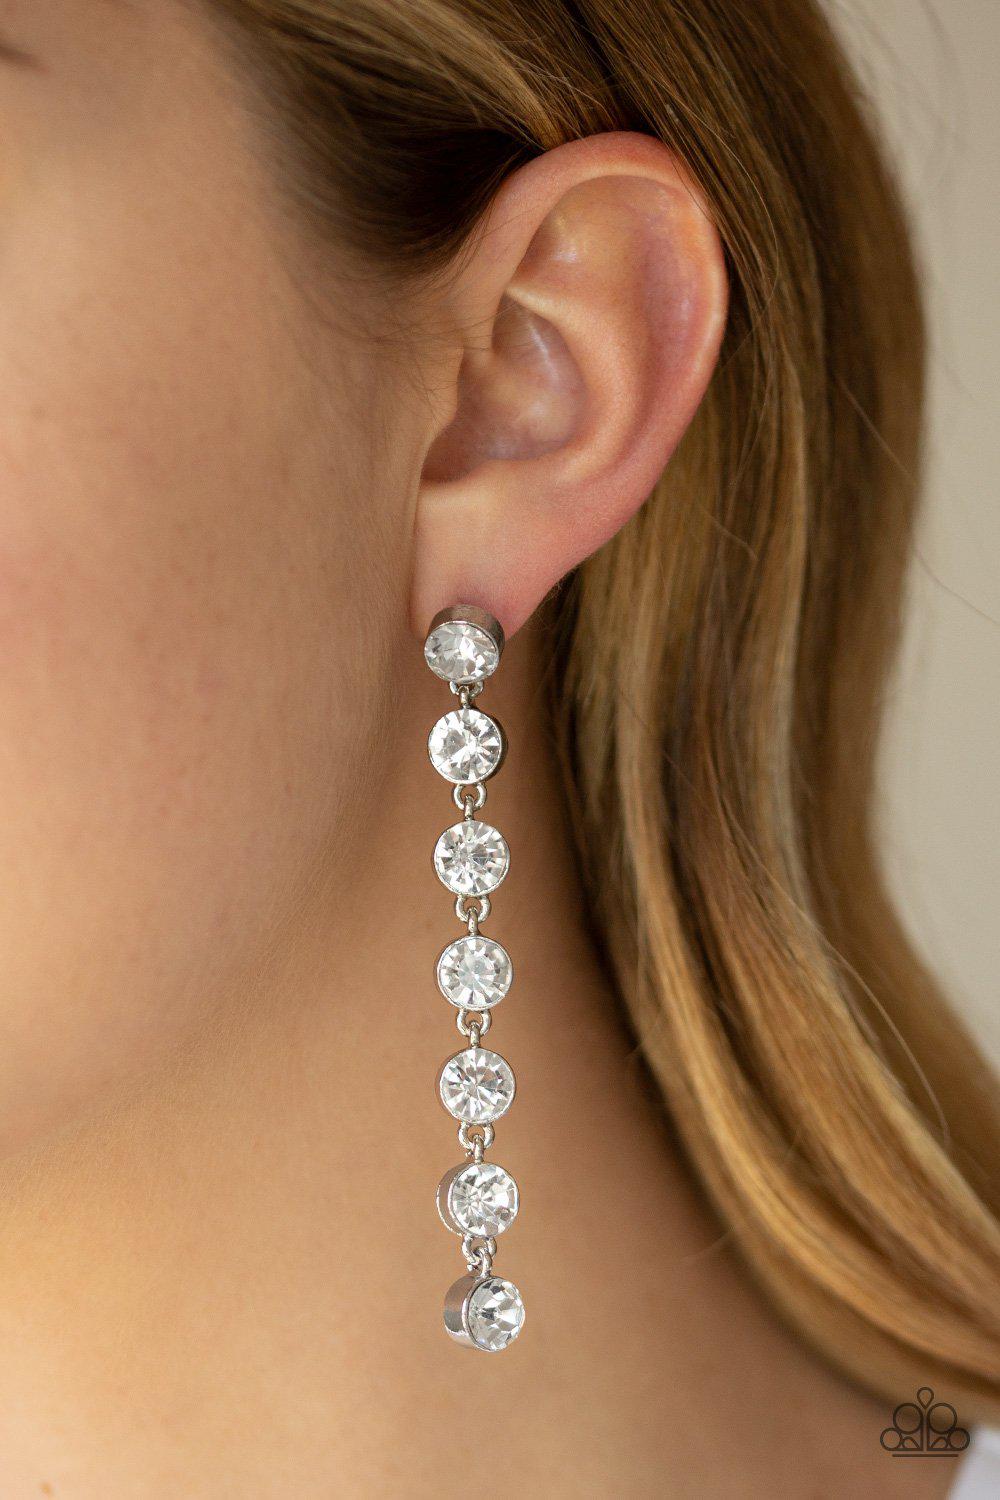 Dazzling Debonair White Rhinestone Earrings - Paparazzi Accessories-CarasShop.com - $5 Jewelry by Cara Jewels